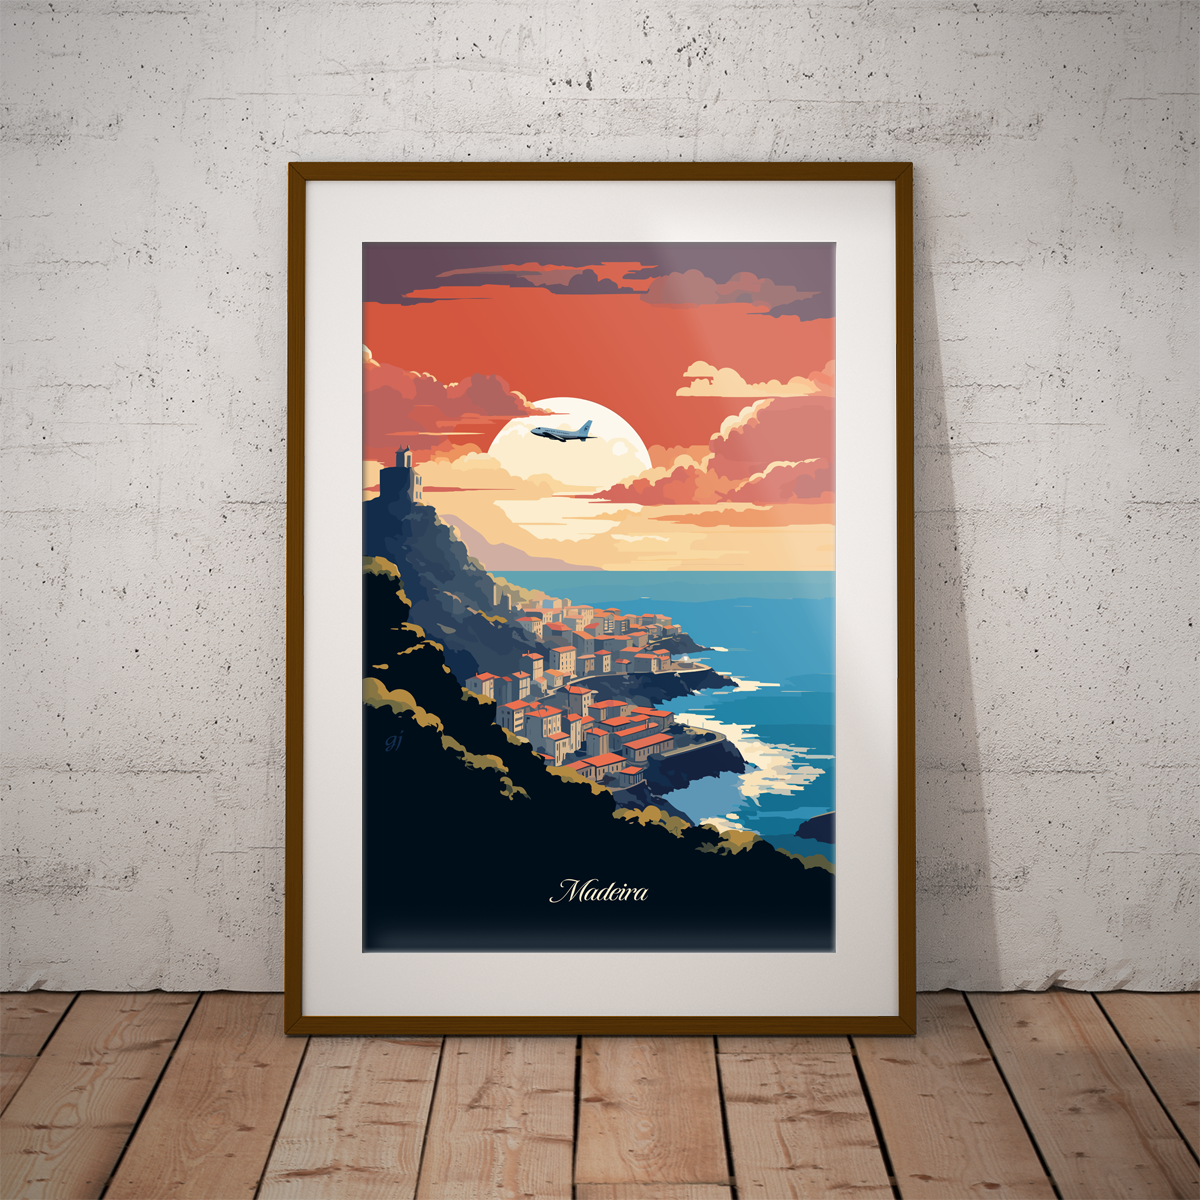 Madeira poster by bon voyage design